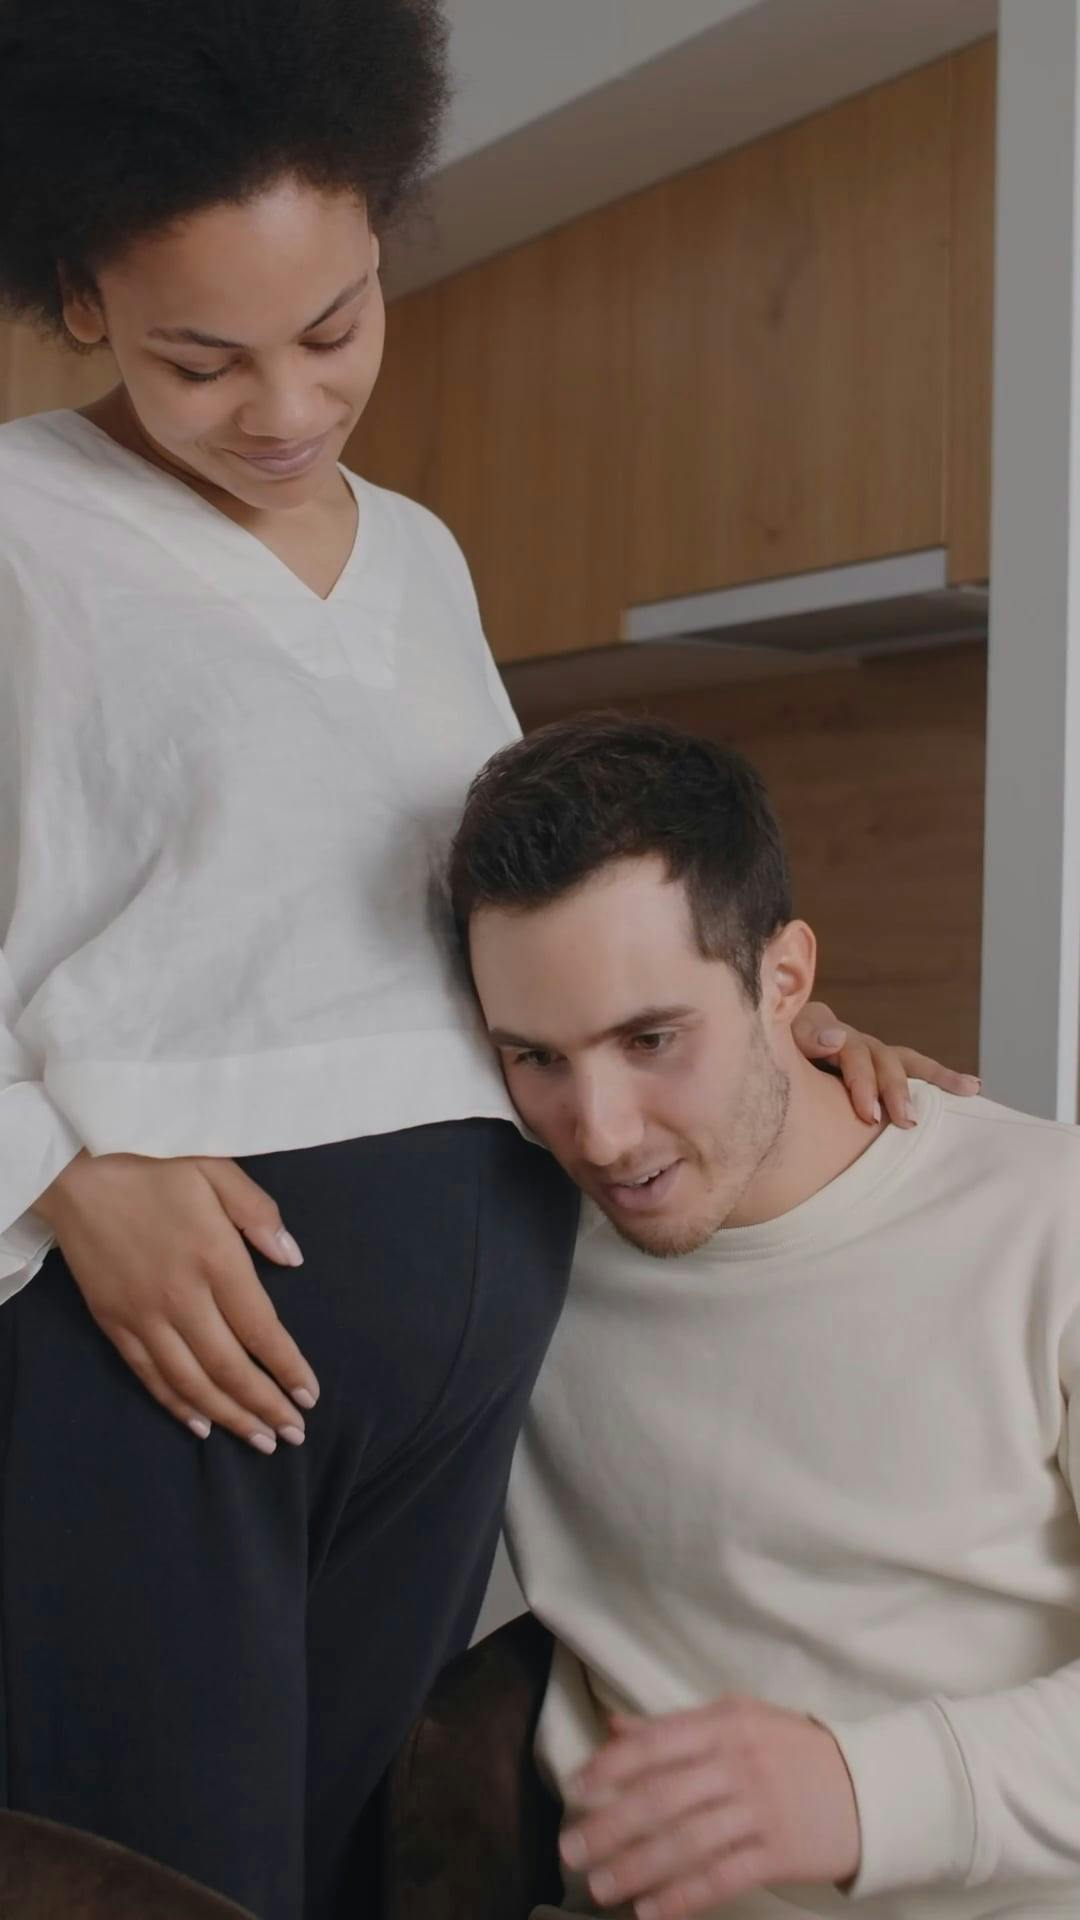 Pregnant Clips